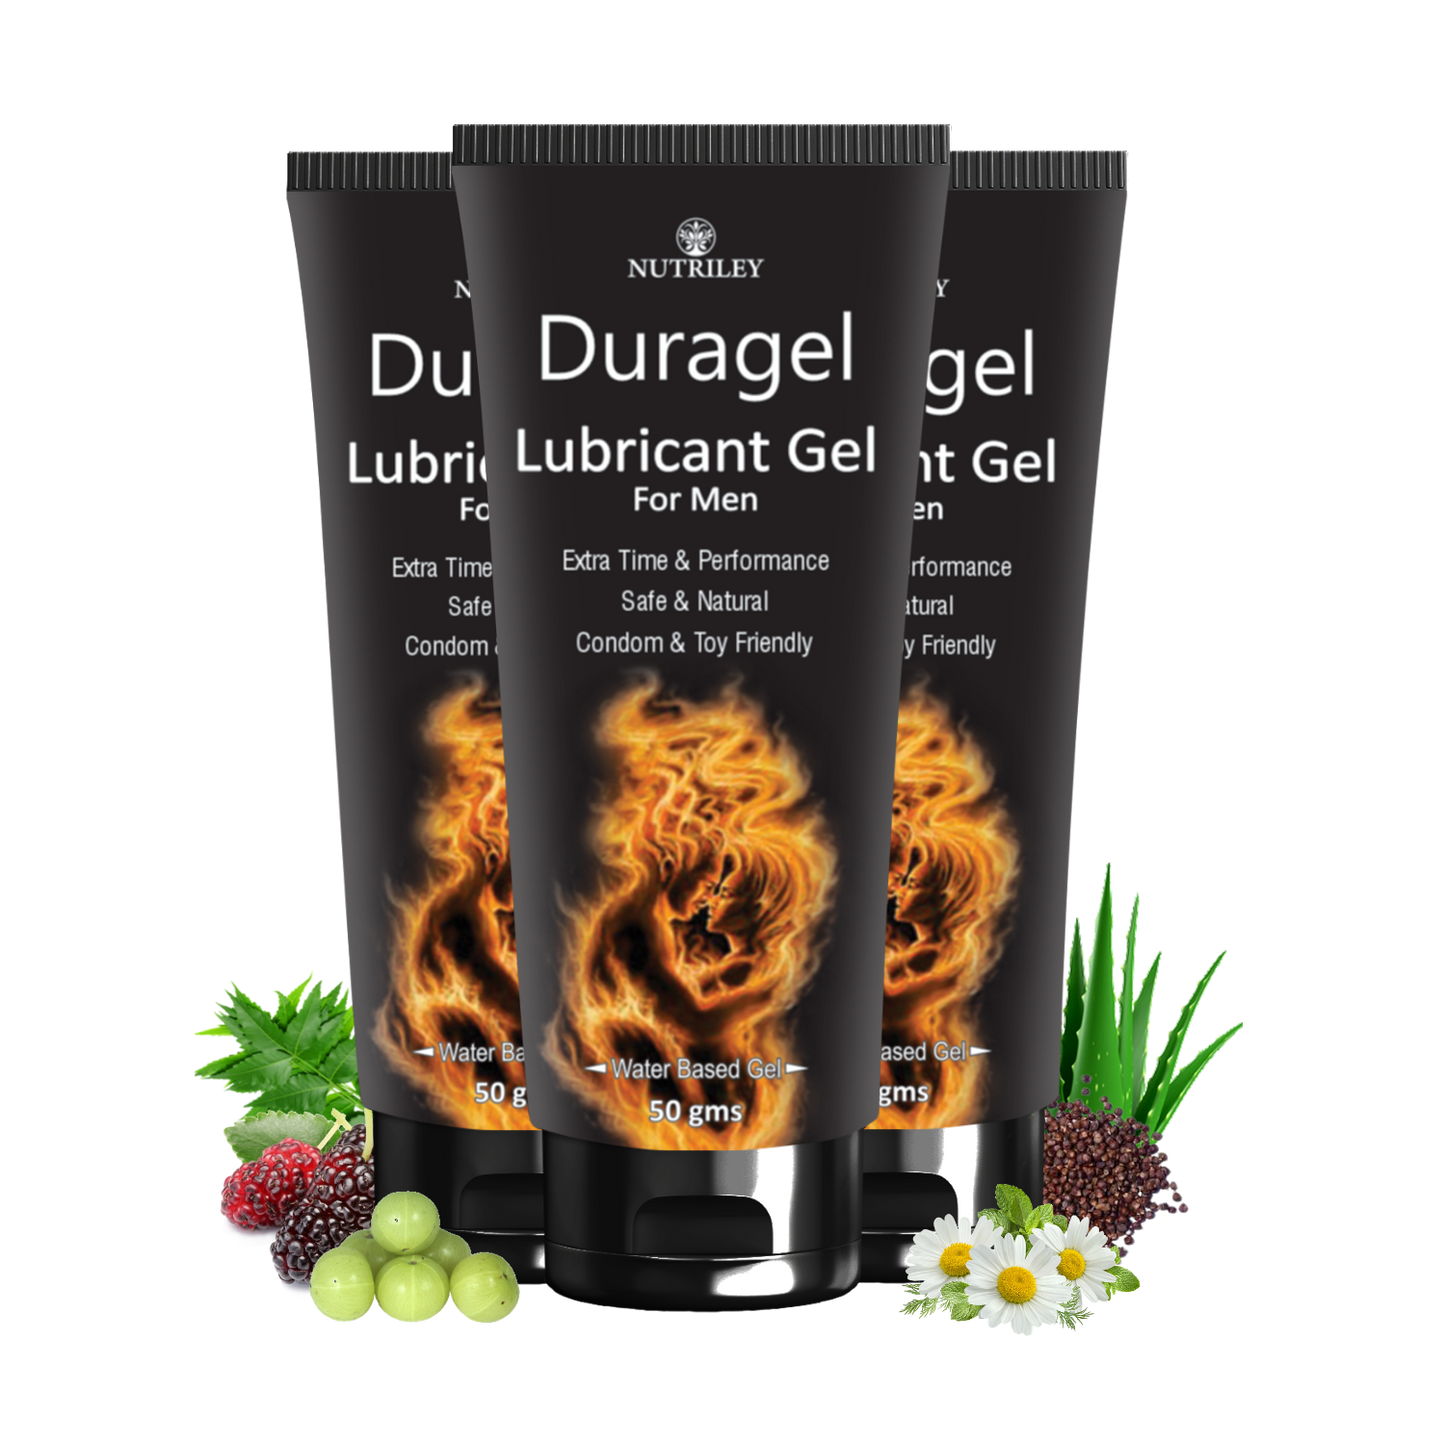 Nutriley Duragel - Lubricant Gel for Men (50gm)